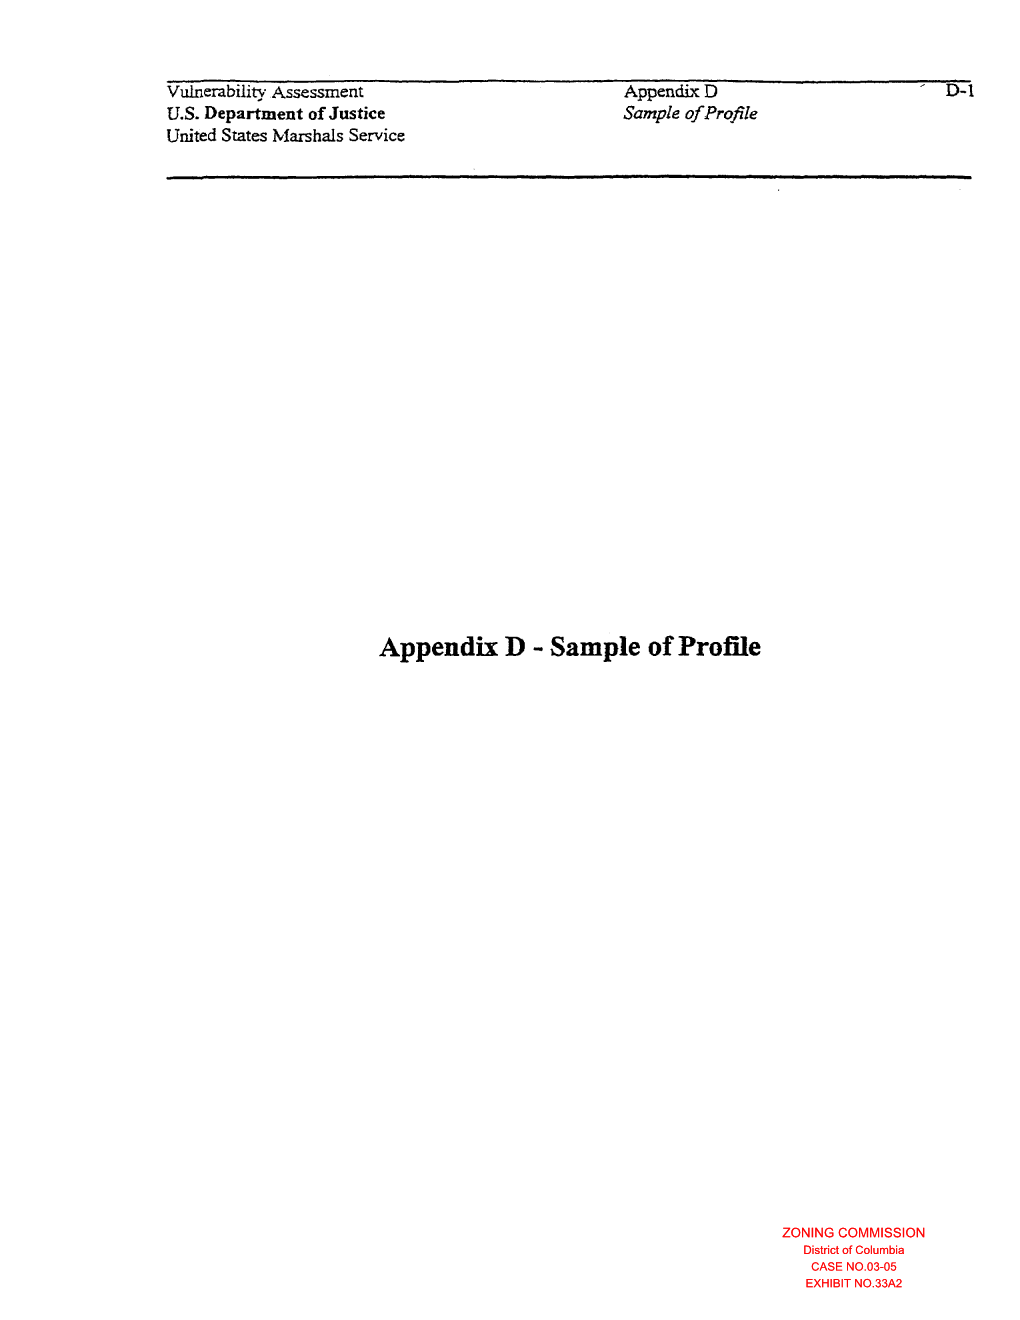 Appendix D - Sample of Profile